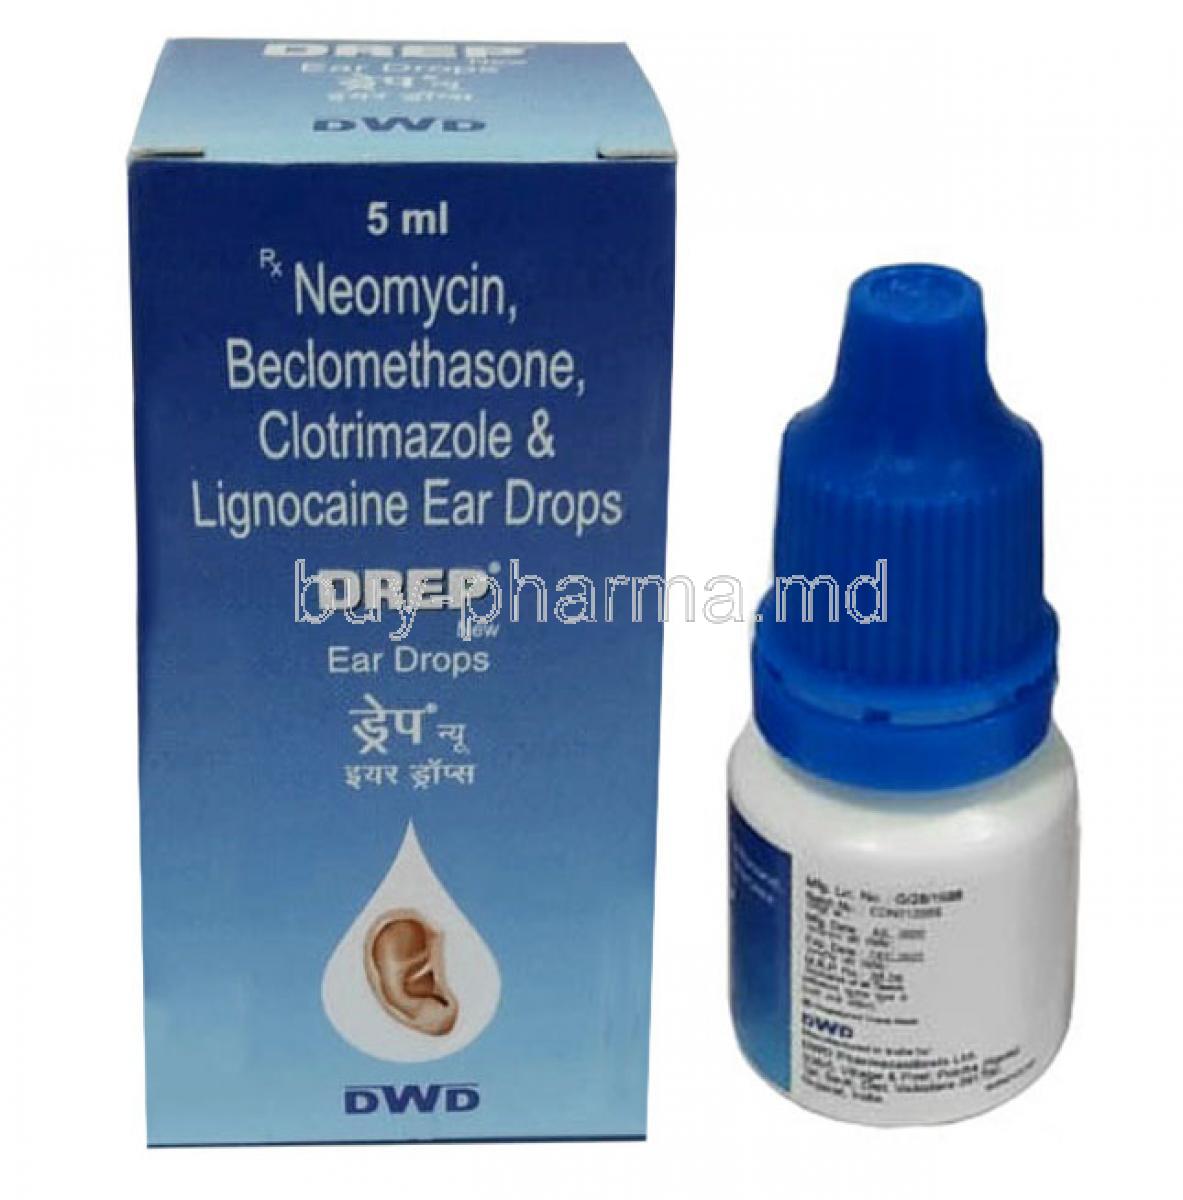 Drep Ear Drops, Ofloxacin 0.3%wv Beclomethasone 0.025%wv Clotrimazole 1%wv Lignocaine 2%wv, Ear Drops 5mL, DWD Pharma, Box front view, Bottle(New package)